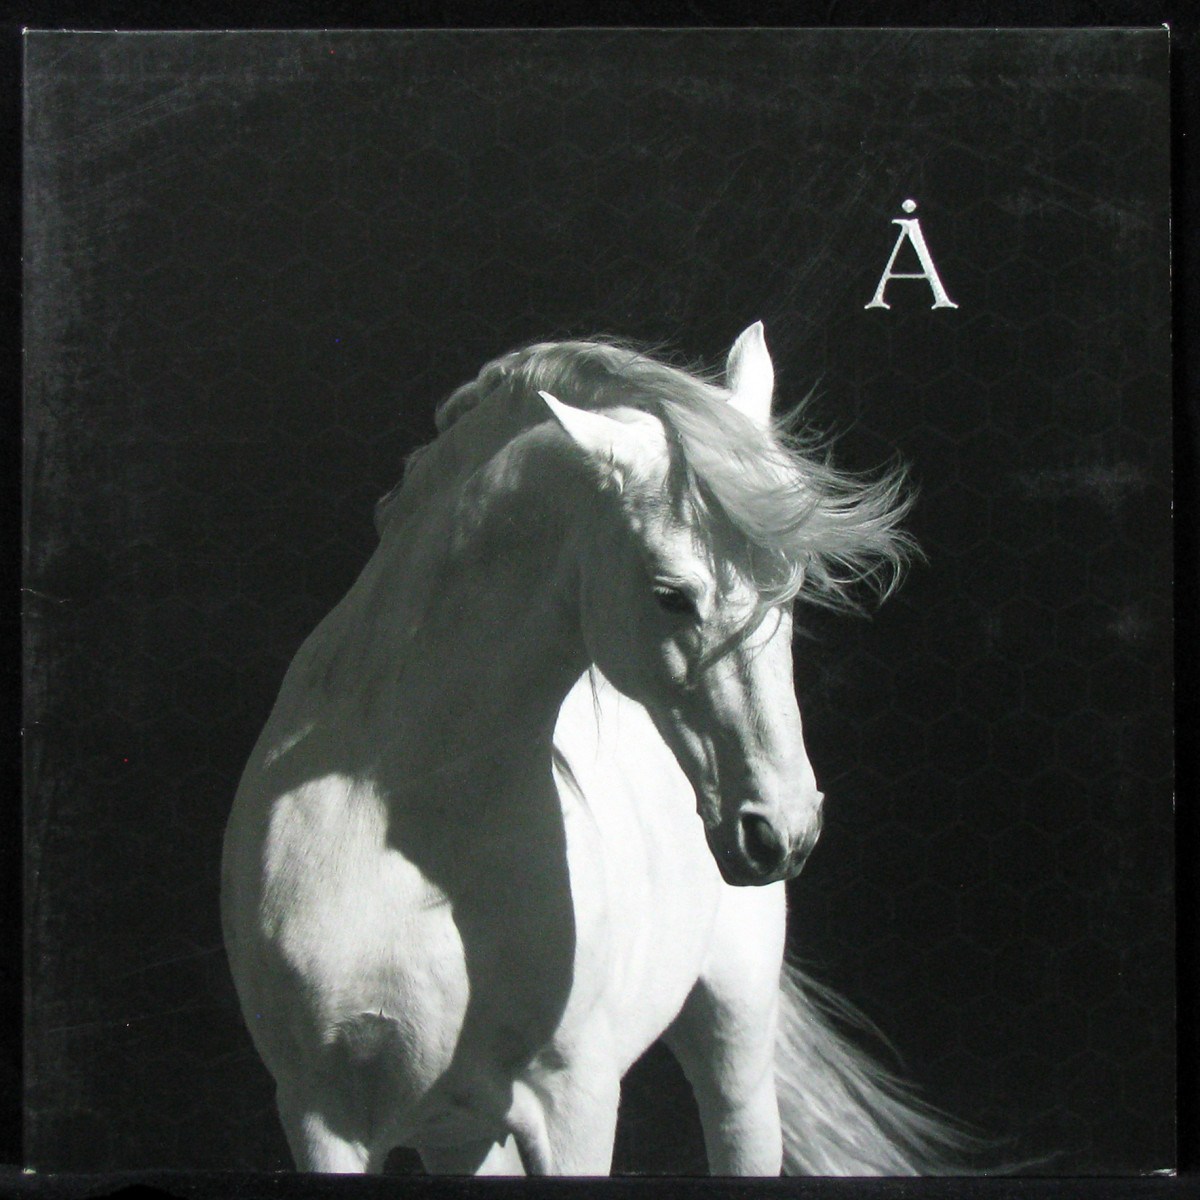 Обложка лошади. Аквариум 2008 - белая лошадь. Лошадь на темном фоне. Лошадь на черном фоне. Белая лошадь.